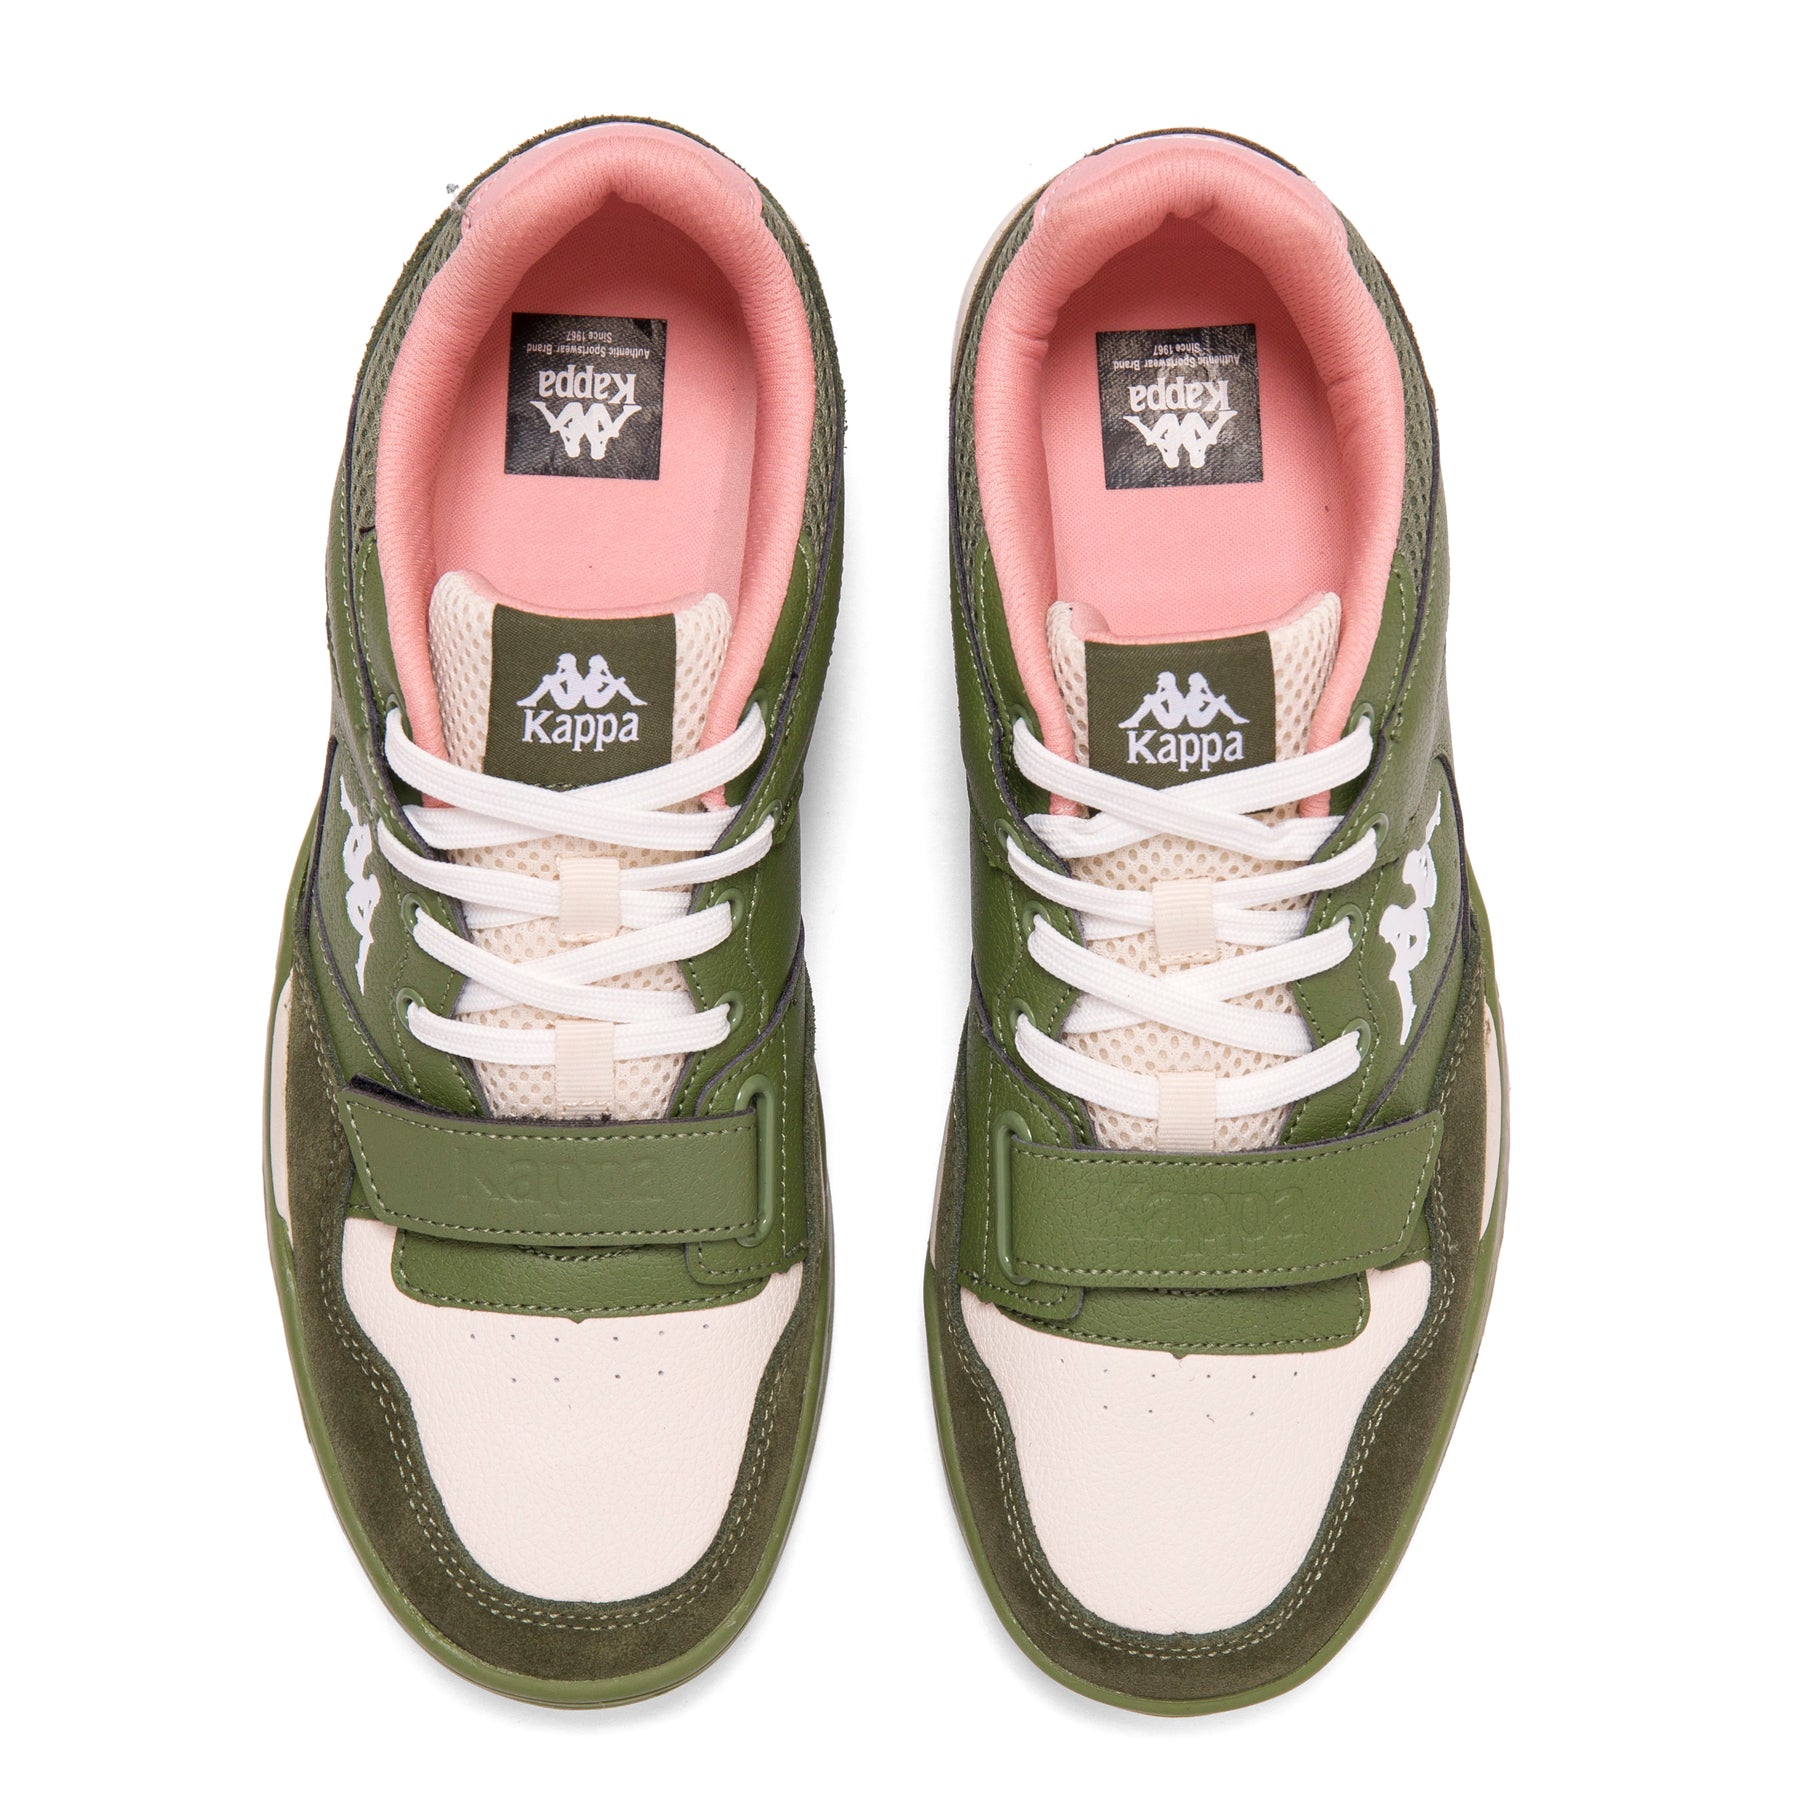 Sneakers 2 - Kappa Pink Atlanta USA Authentic – Green Olive